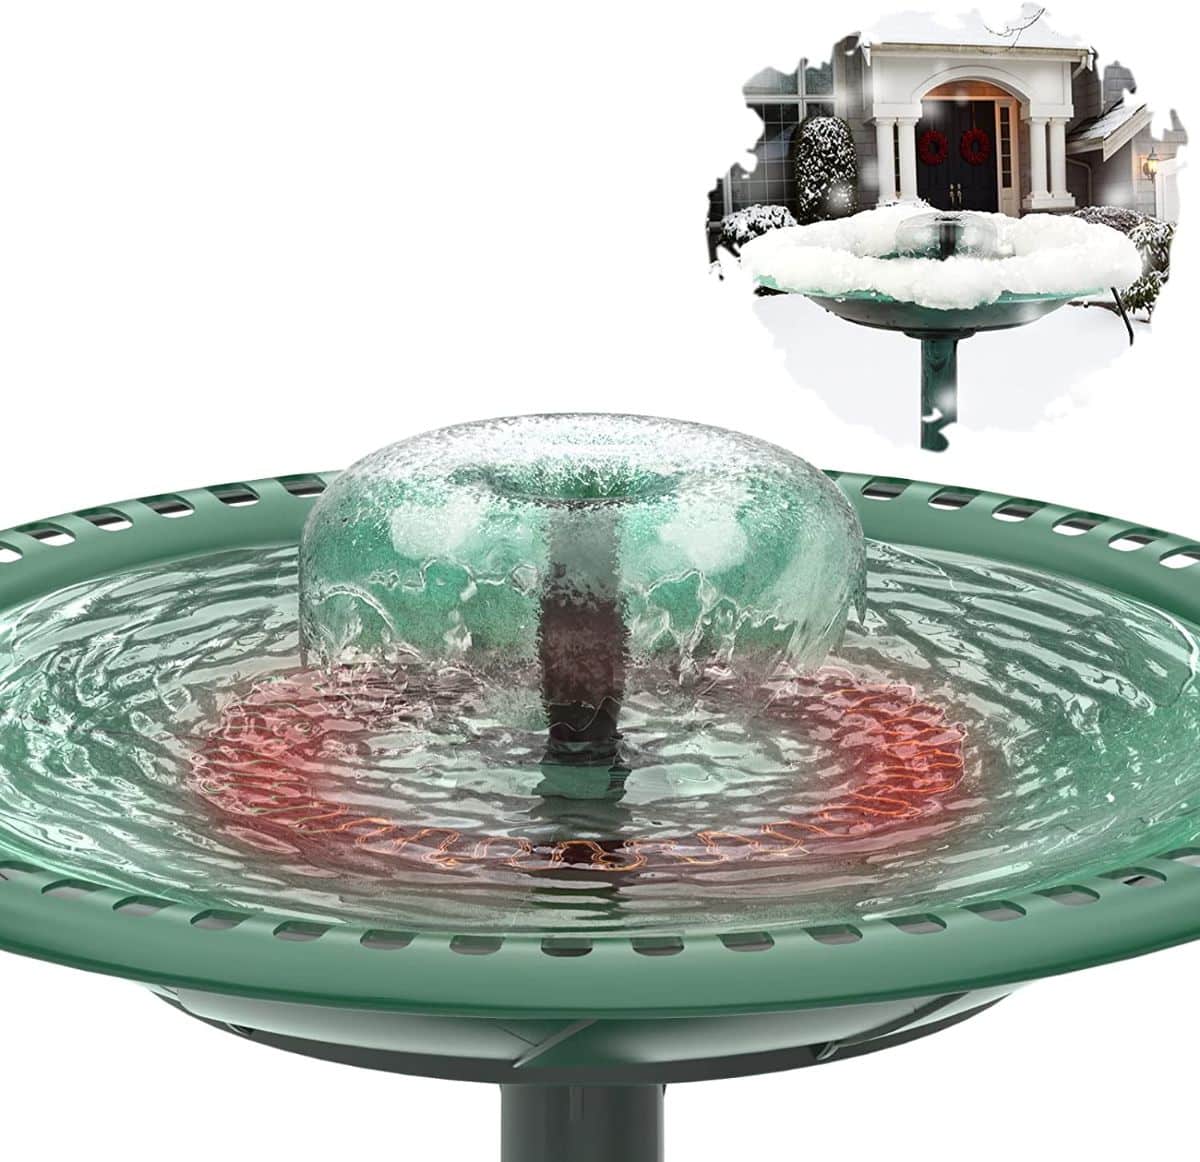 Heated bird bath with circulating fountain pump from AISITIN